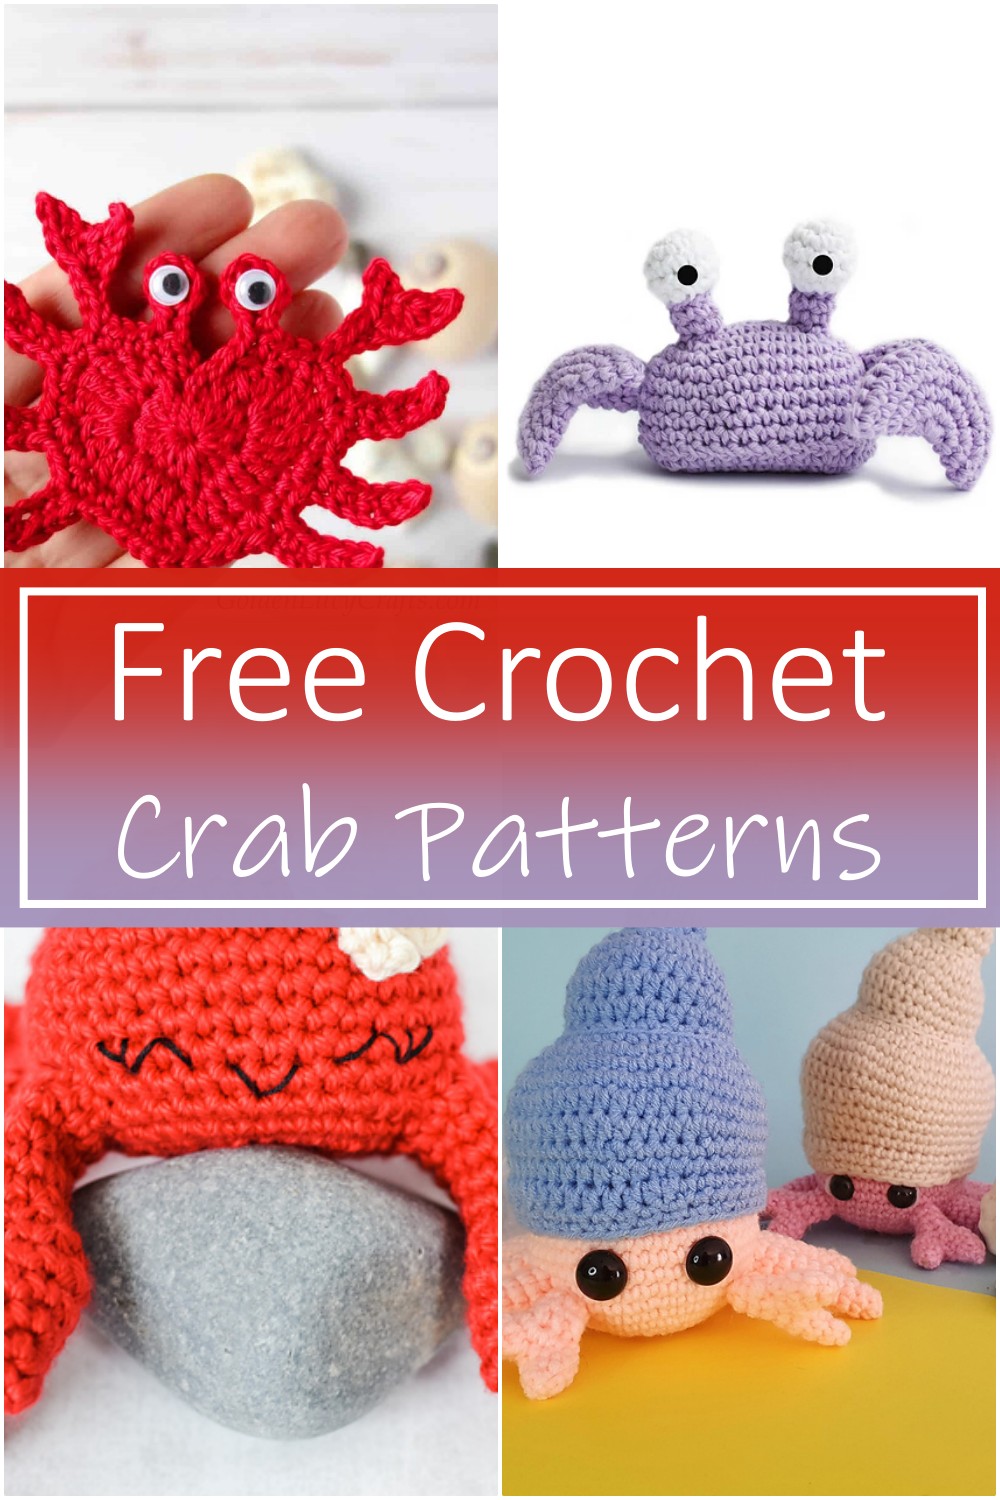 Free Crochet Crab Patterns